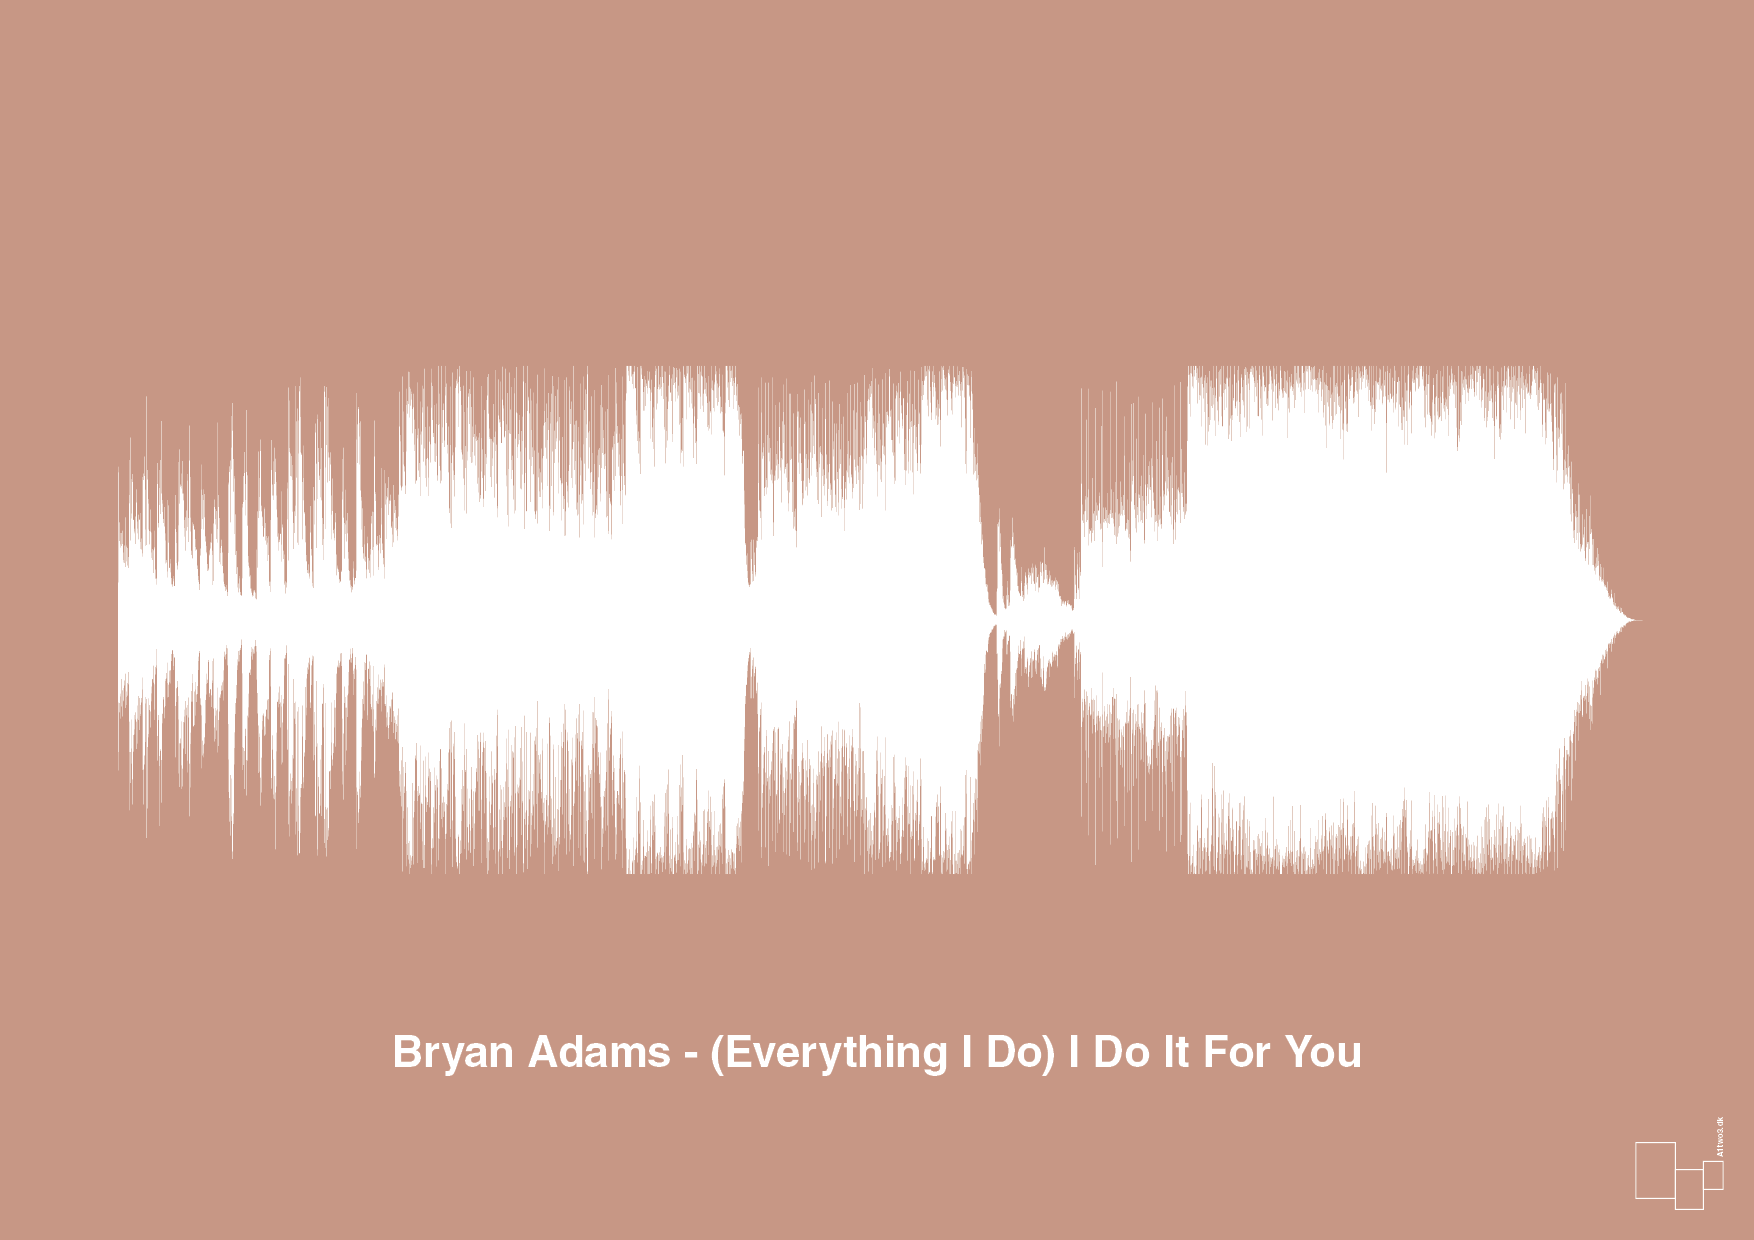 bryan adams - (everything i do) i do it for you - Plakat med Musik i Powder